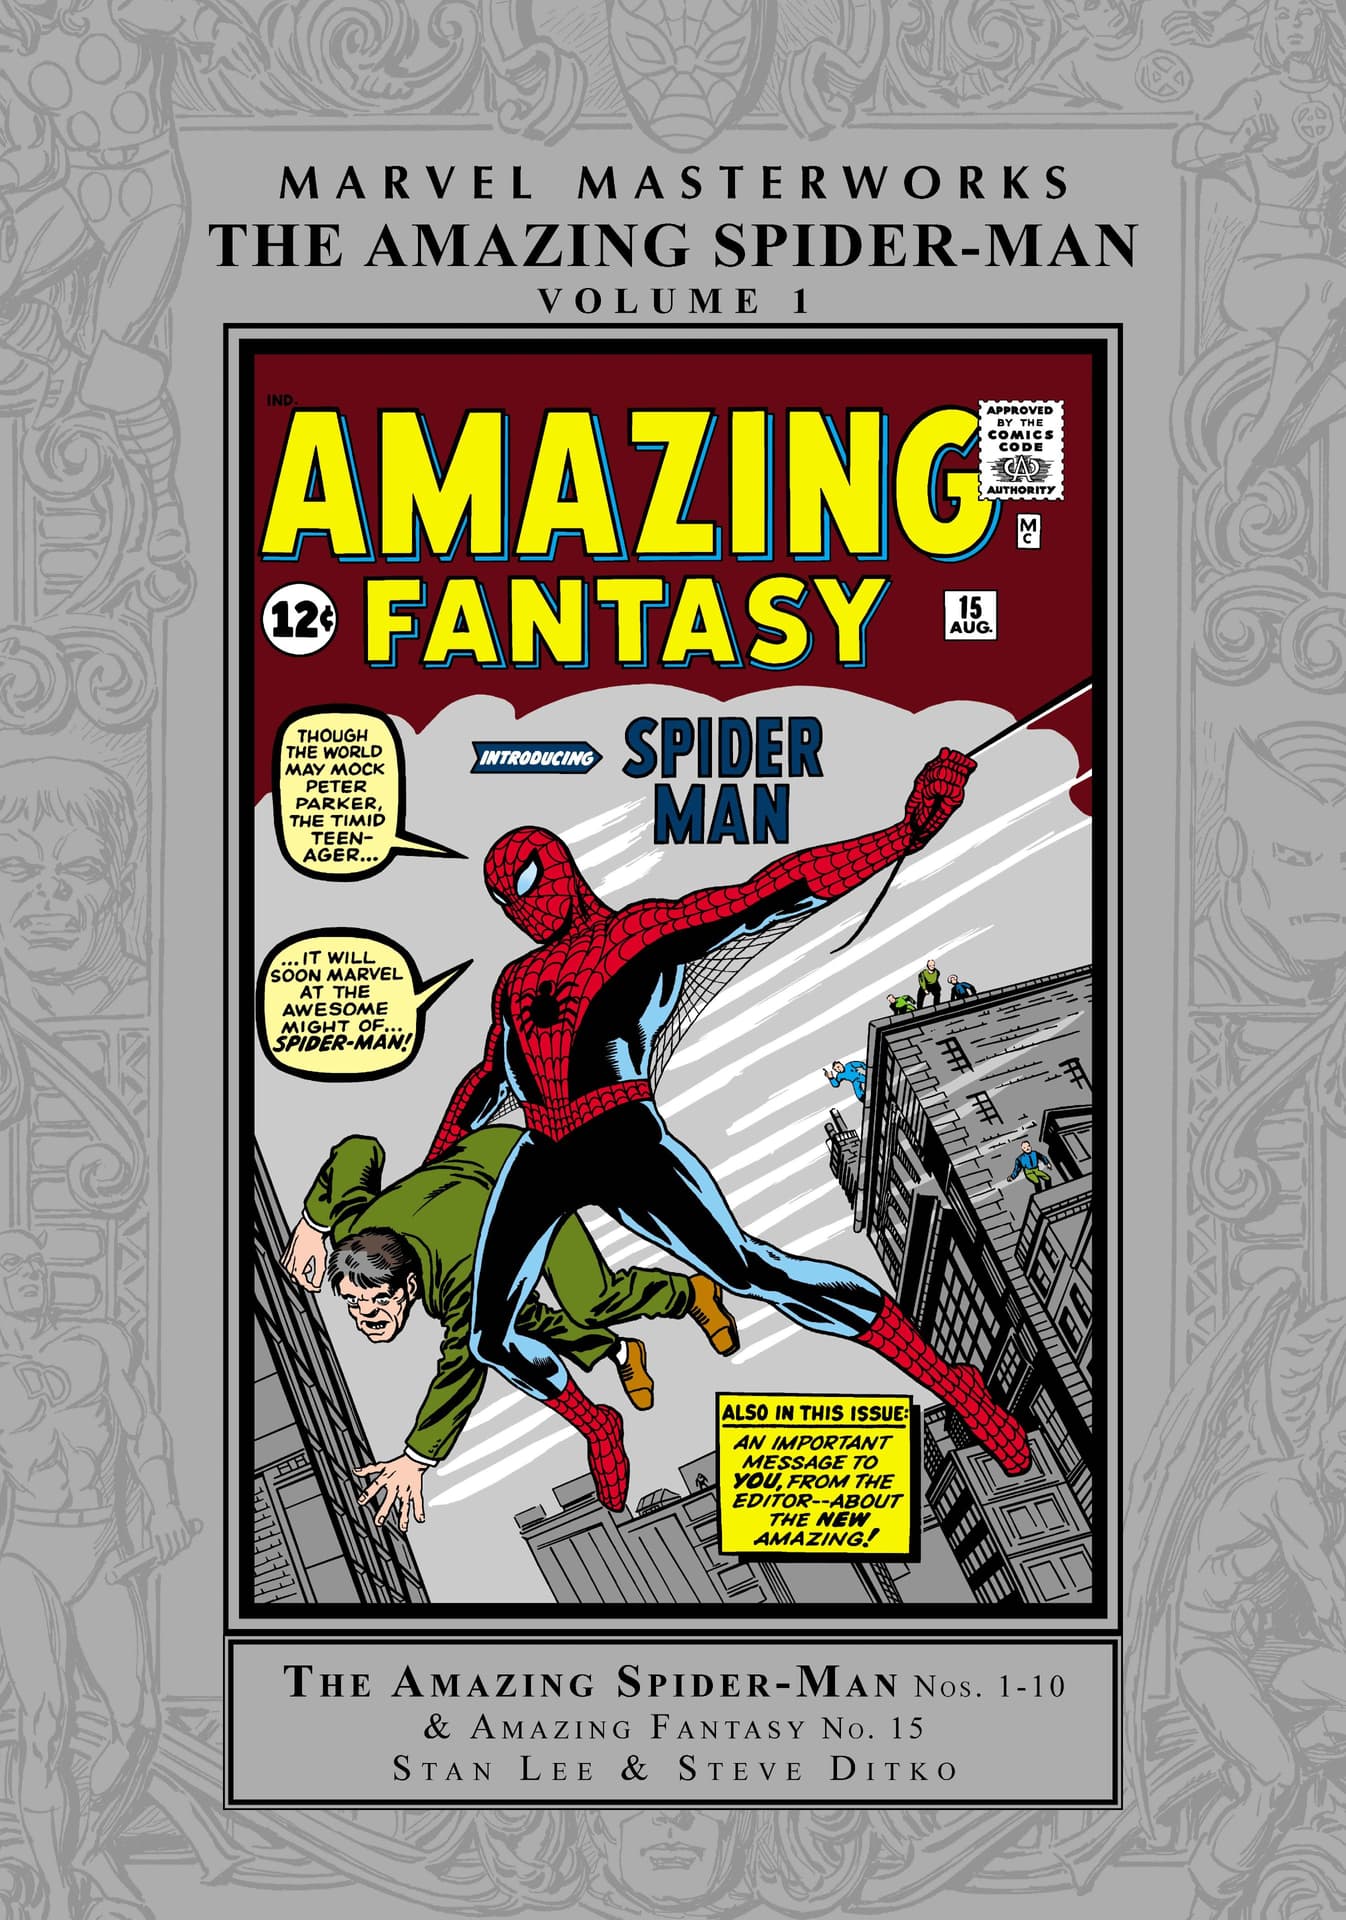 MARVEL MASTERWORKS: THE AMAZING SPIDER-MAN VOL. 1 cover